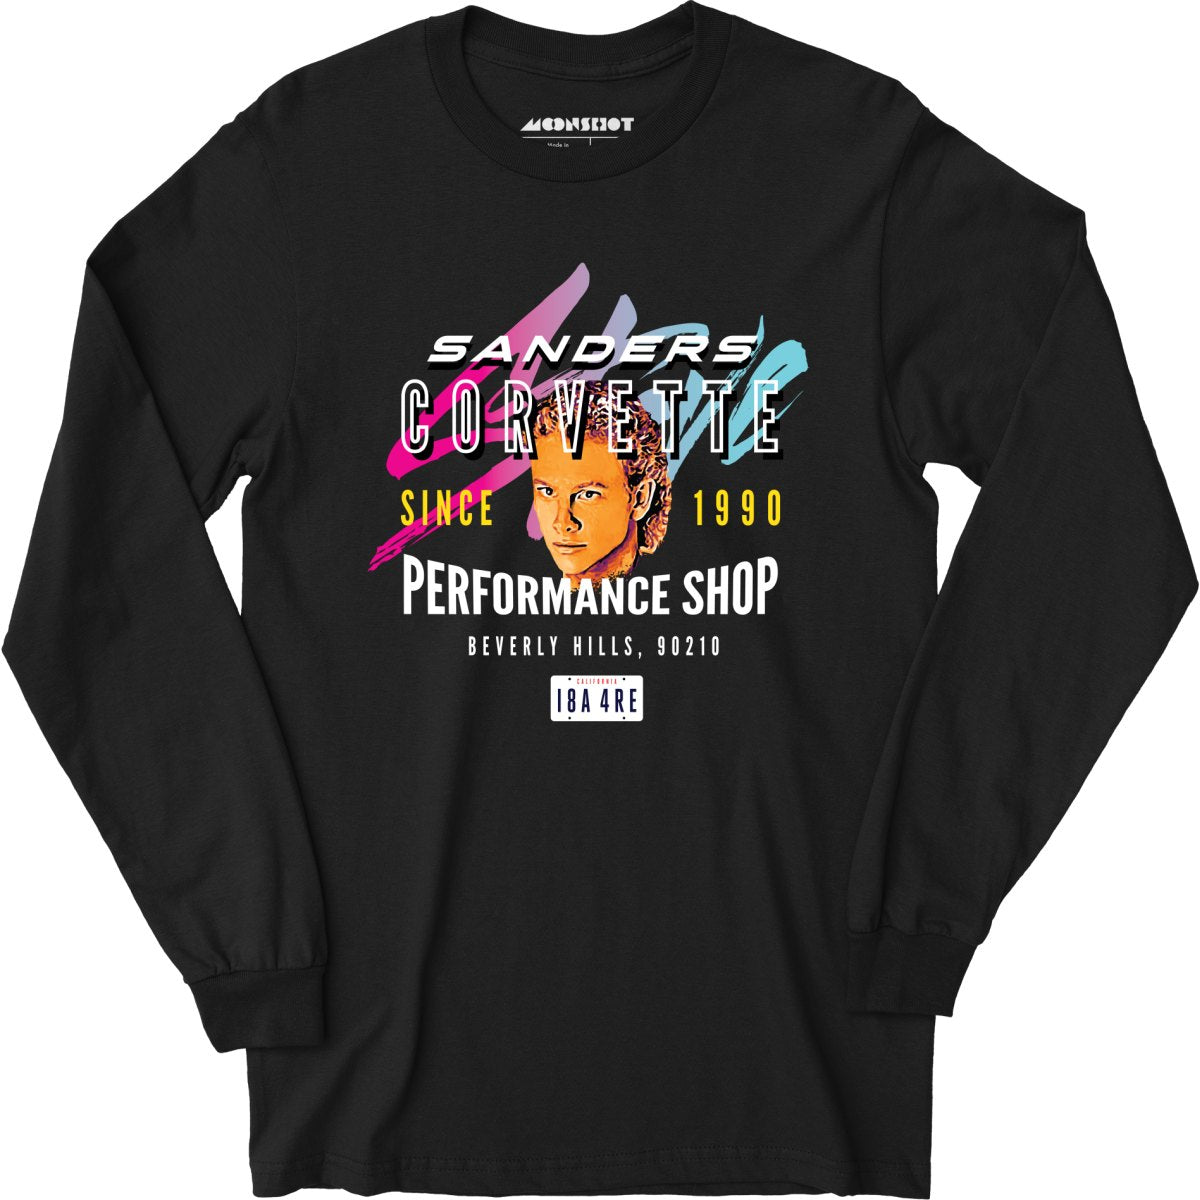 Steve Sanders Corvette Performance Shop - 90210 - Long Sleeve T-Shirt